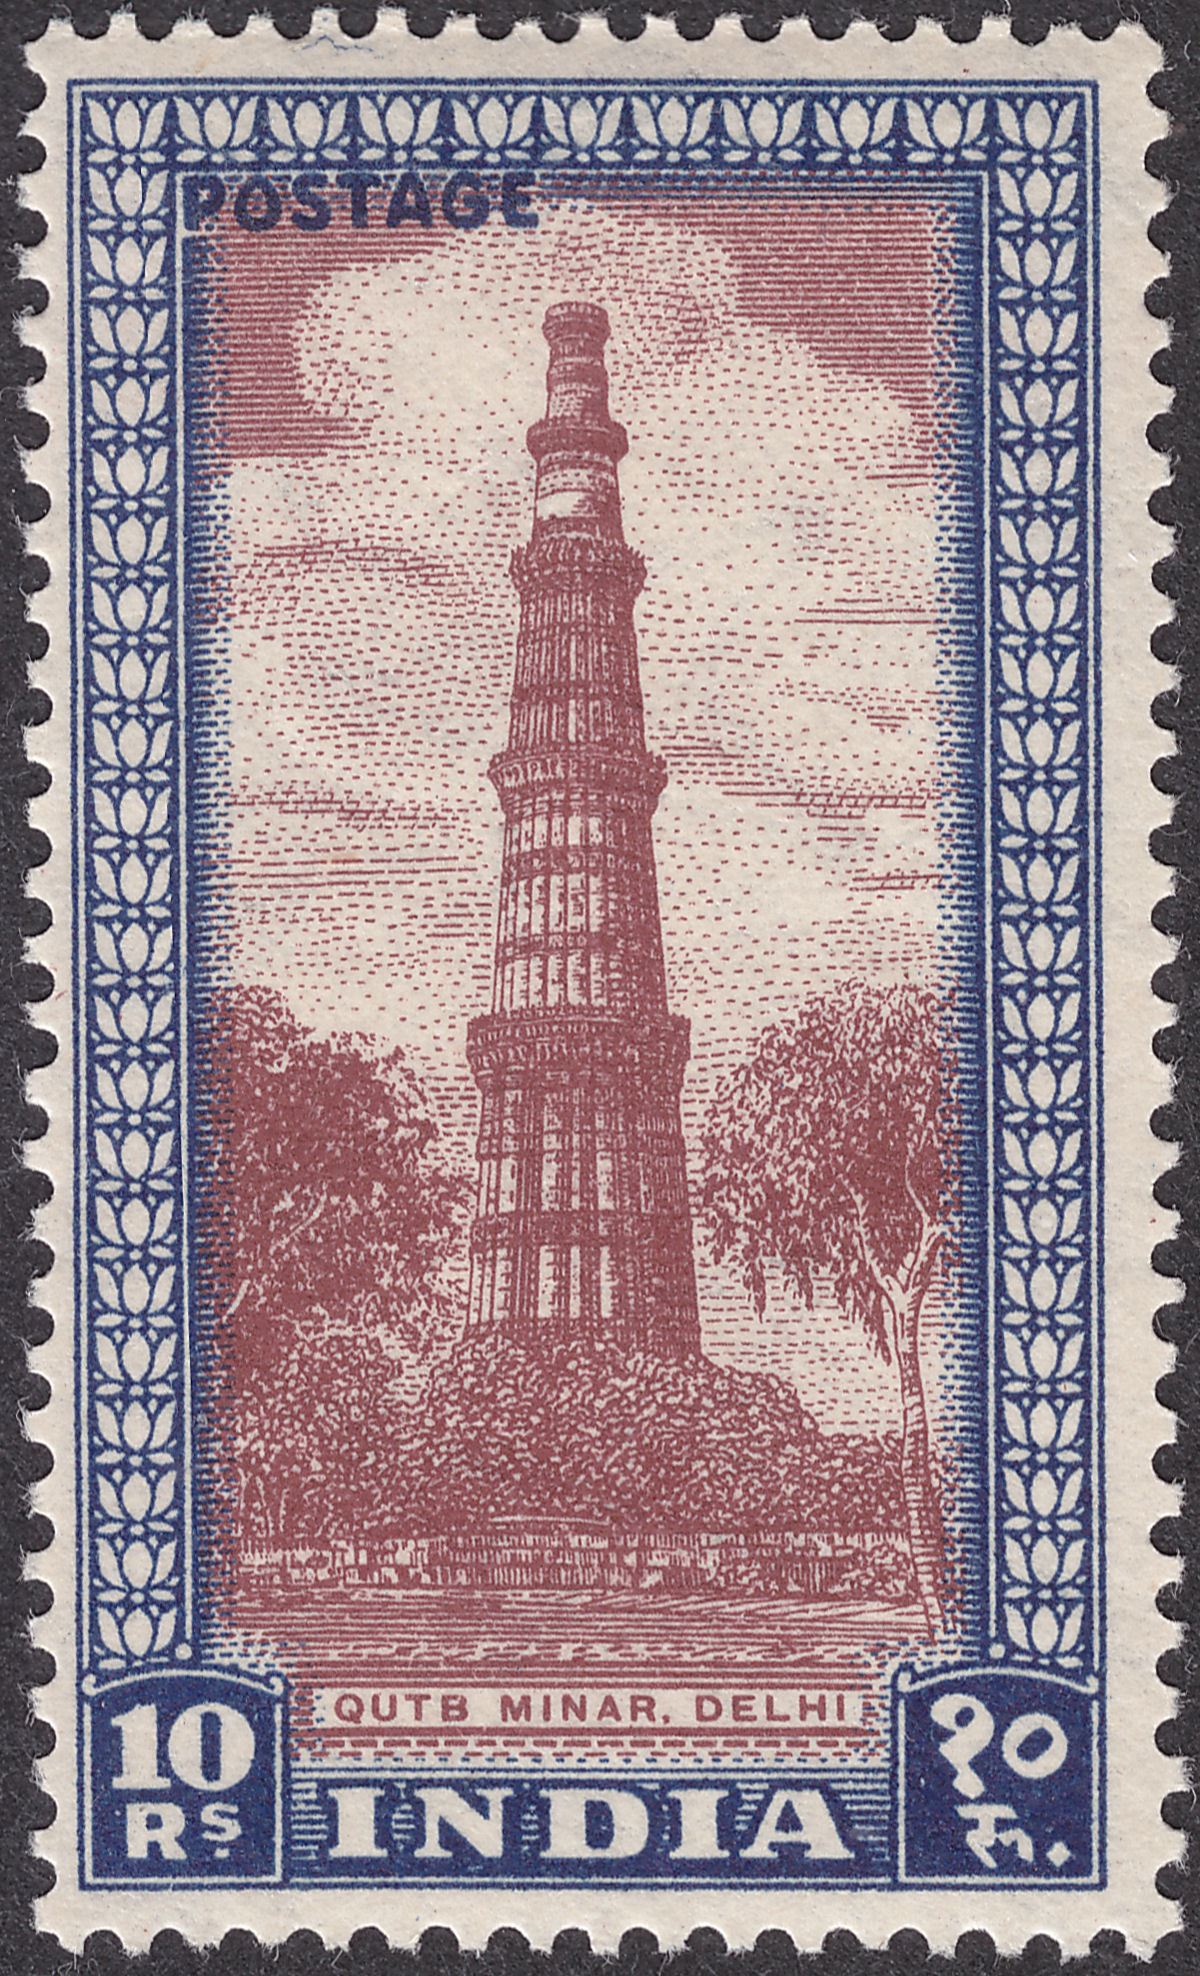 India 1949 Qutb Minar 10r Purple-Brown and Deep Blue UM Mint SG323 cat £160 MNH